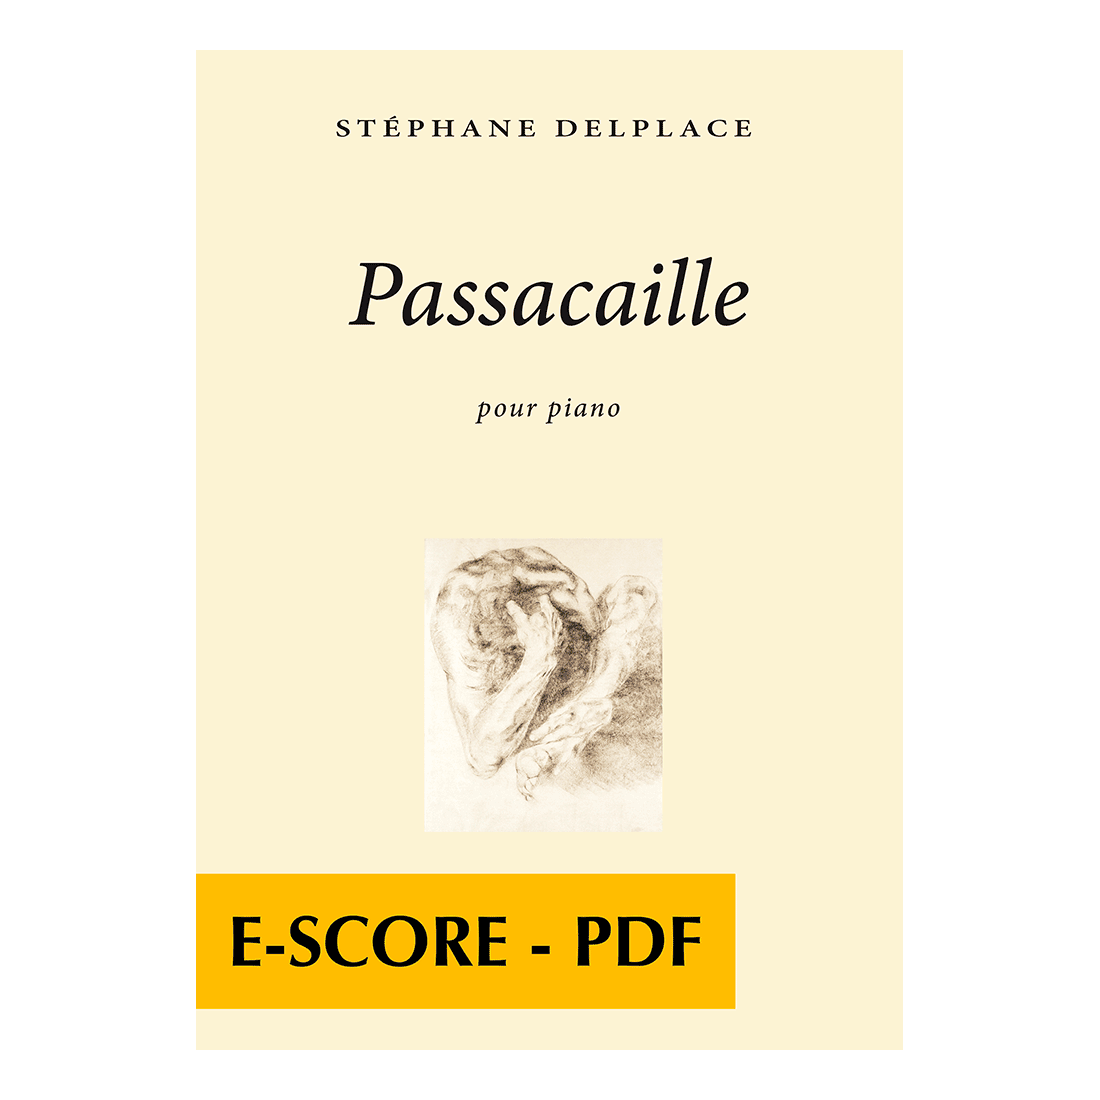 Passacaille pour piano - E-score PDF